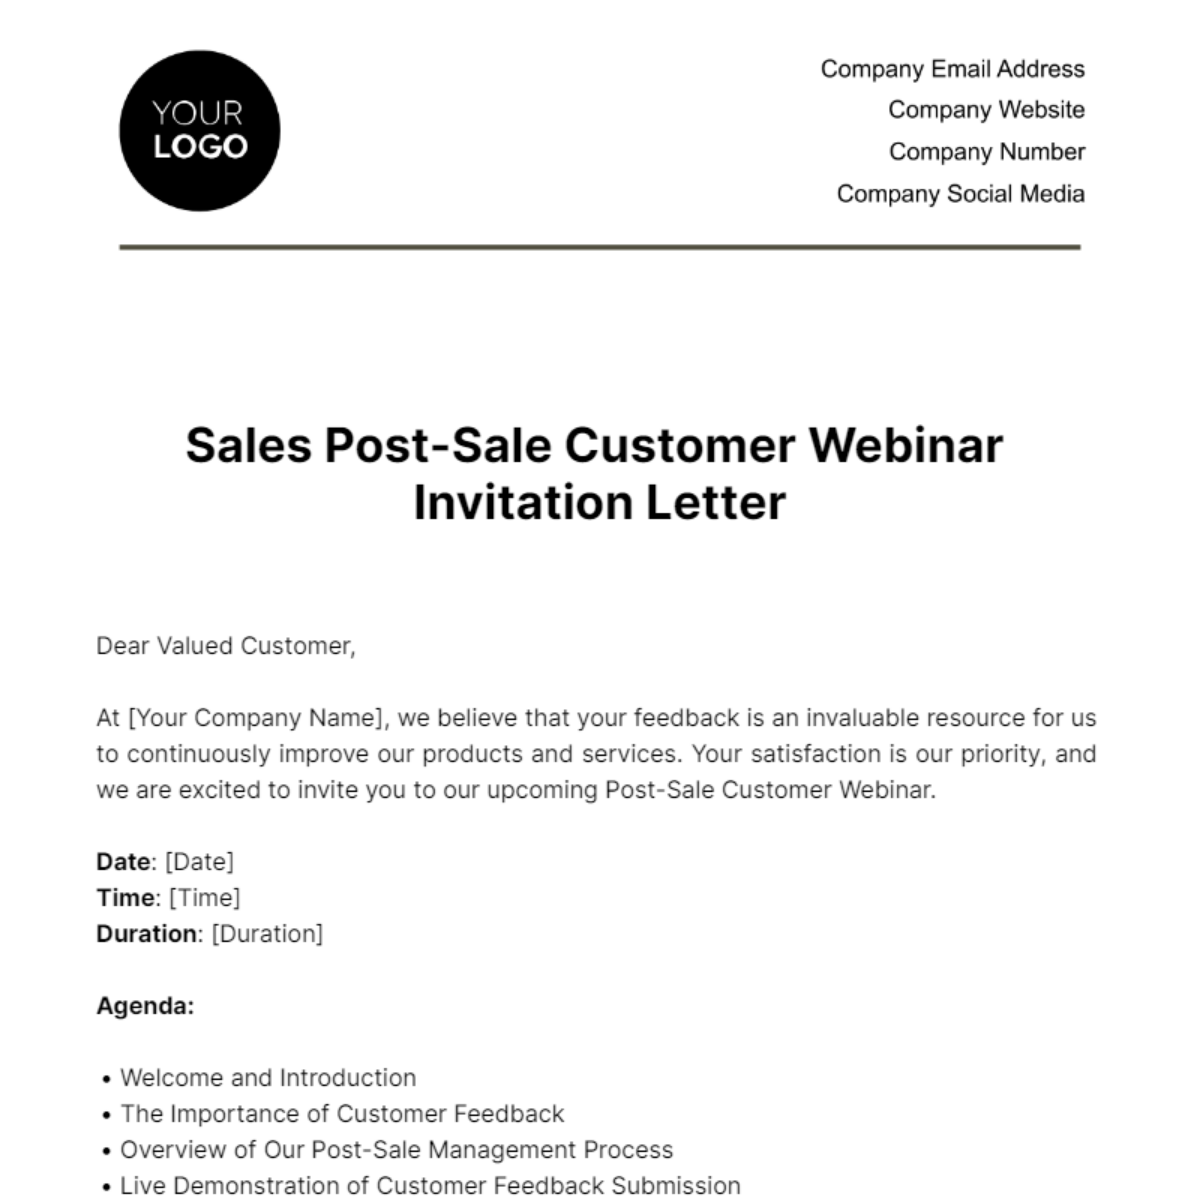 Free Sales Post-Sale Customer Webinar Invitation Letter Template